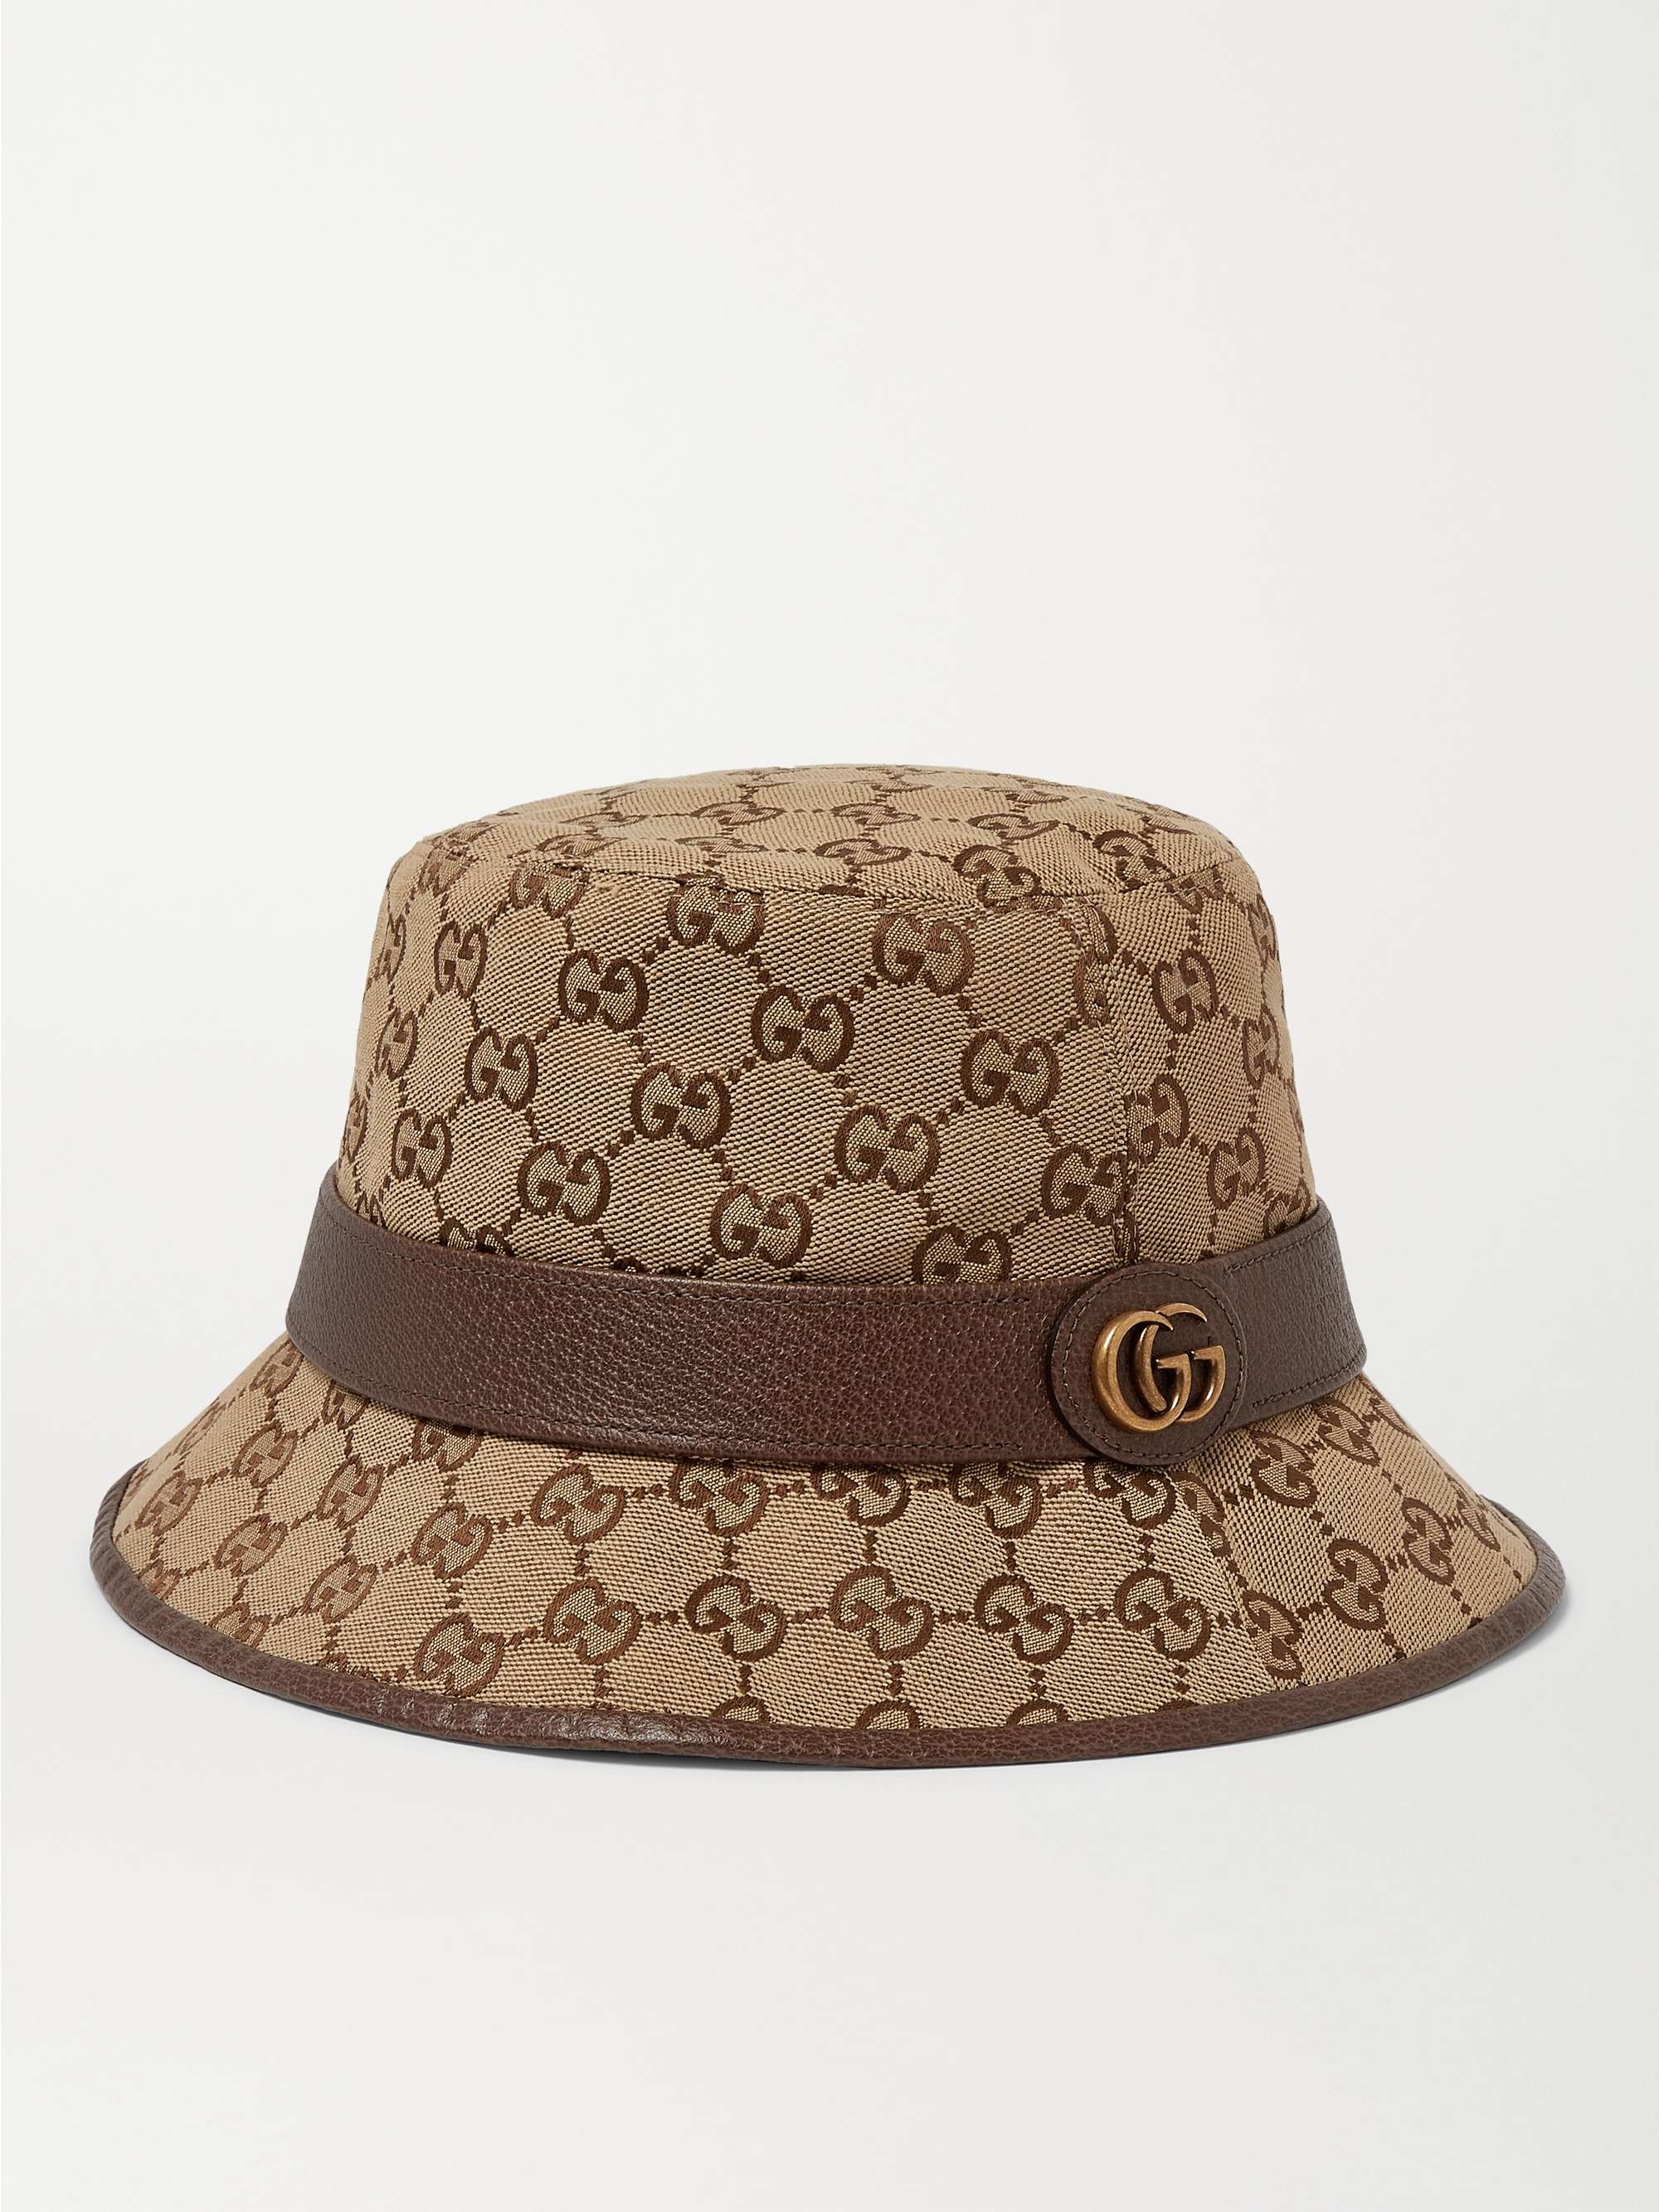 Gucci Men's Bucket Hats - Clothing